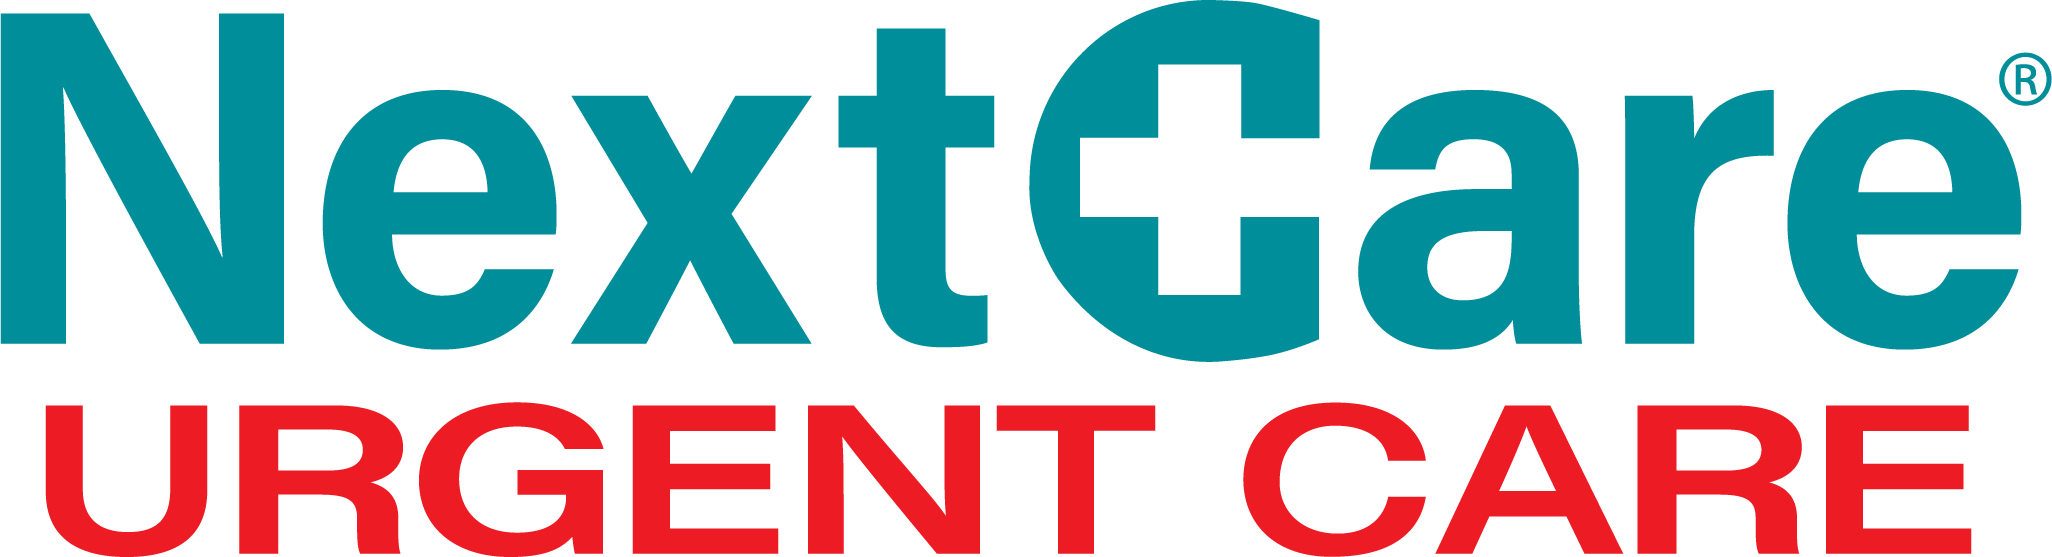 NextCare Urgent Care - Highway 351 Logo